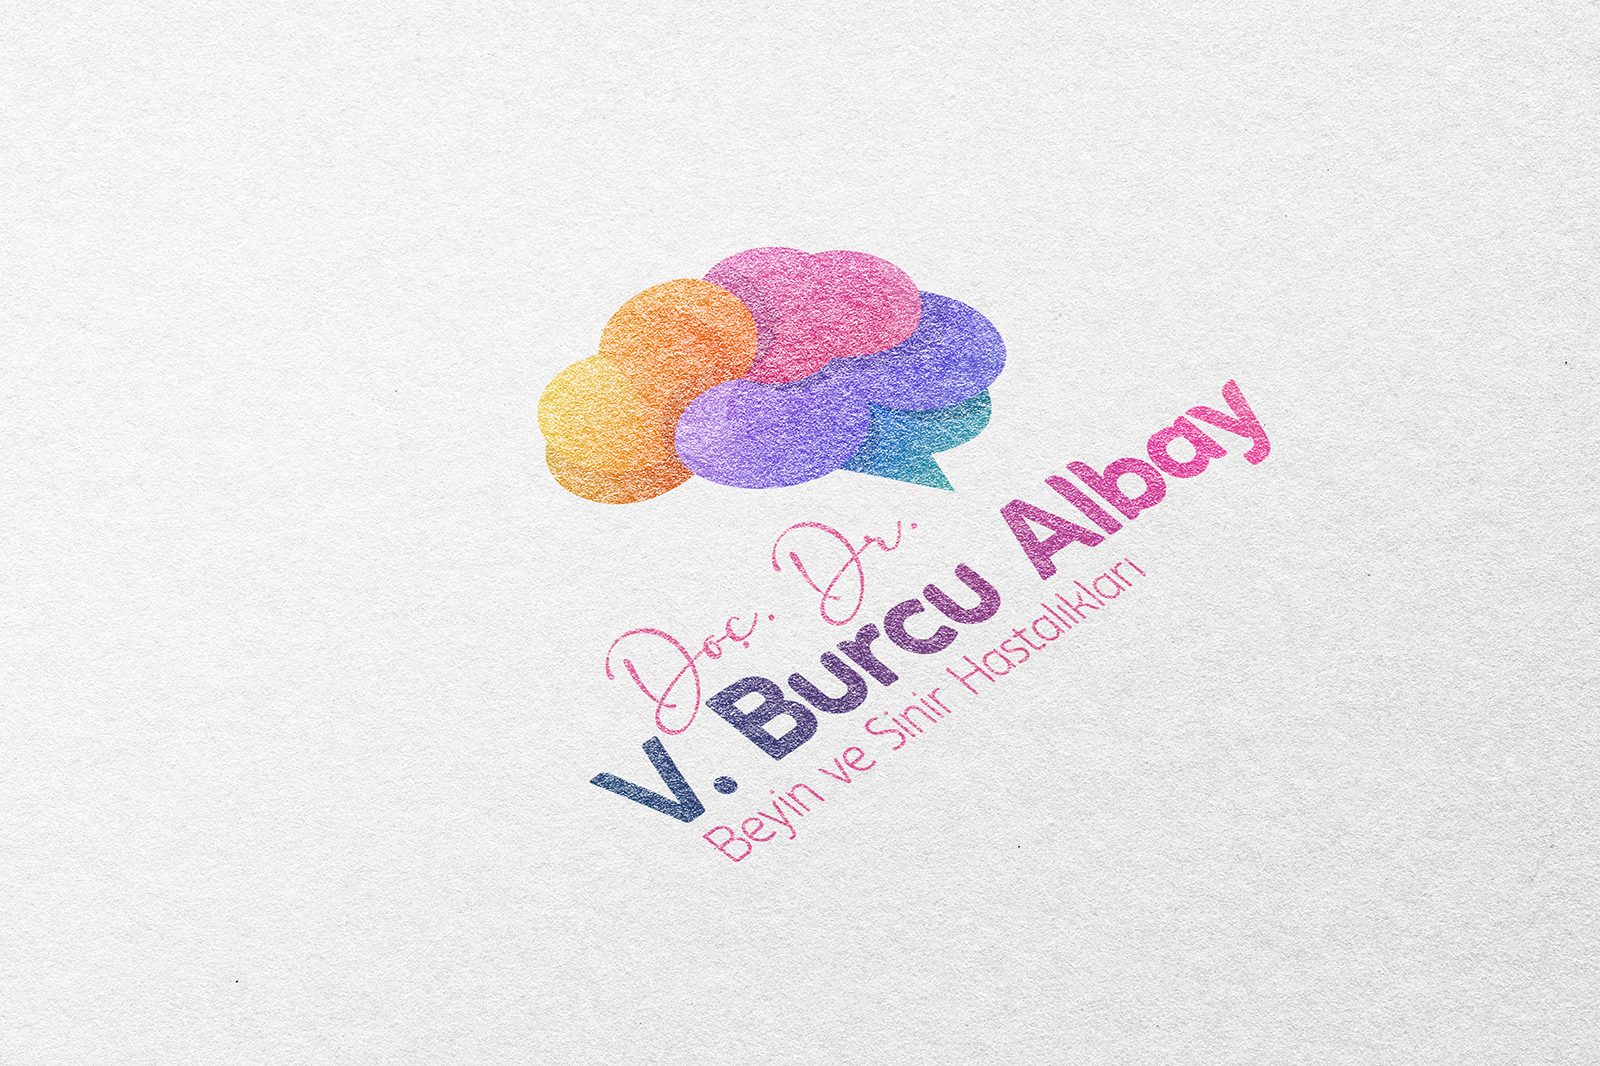 Doç. Dr. V. Burcu Albay Logo & Web Tasarımı